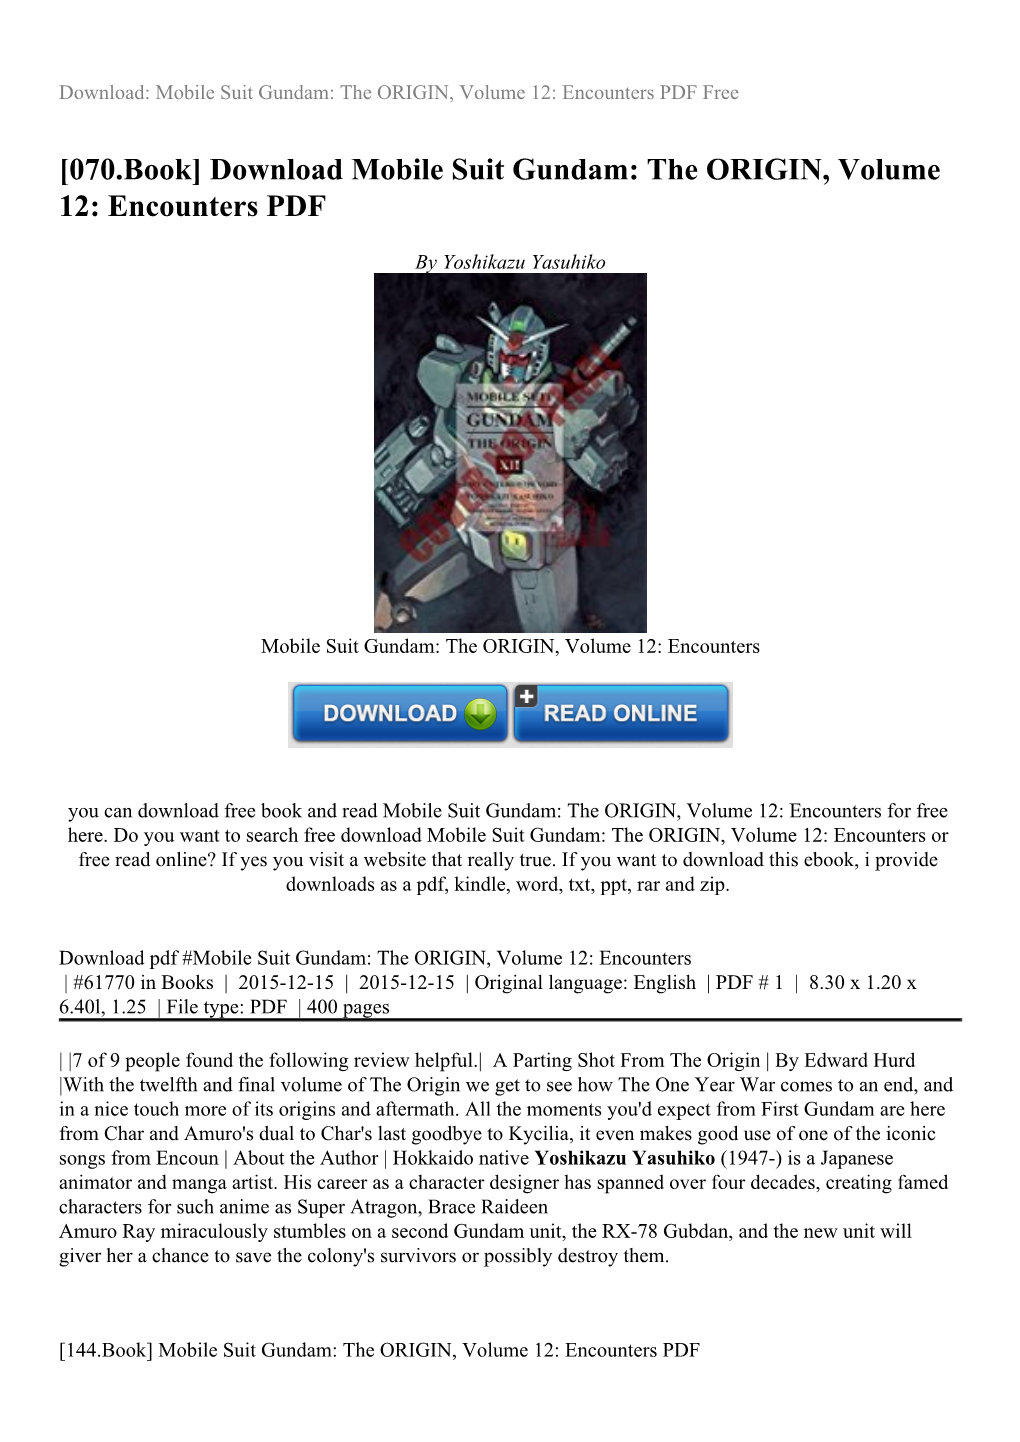 Download Mobile Suit Gundam: the ORIGIN, Volume 12: Encounters PDF